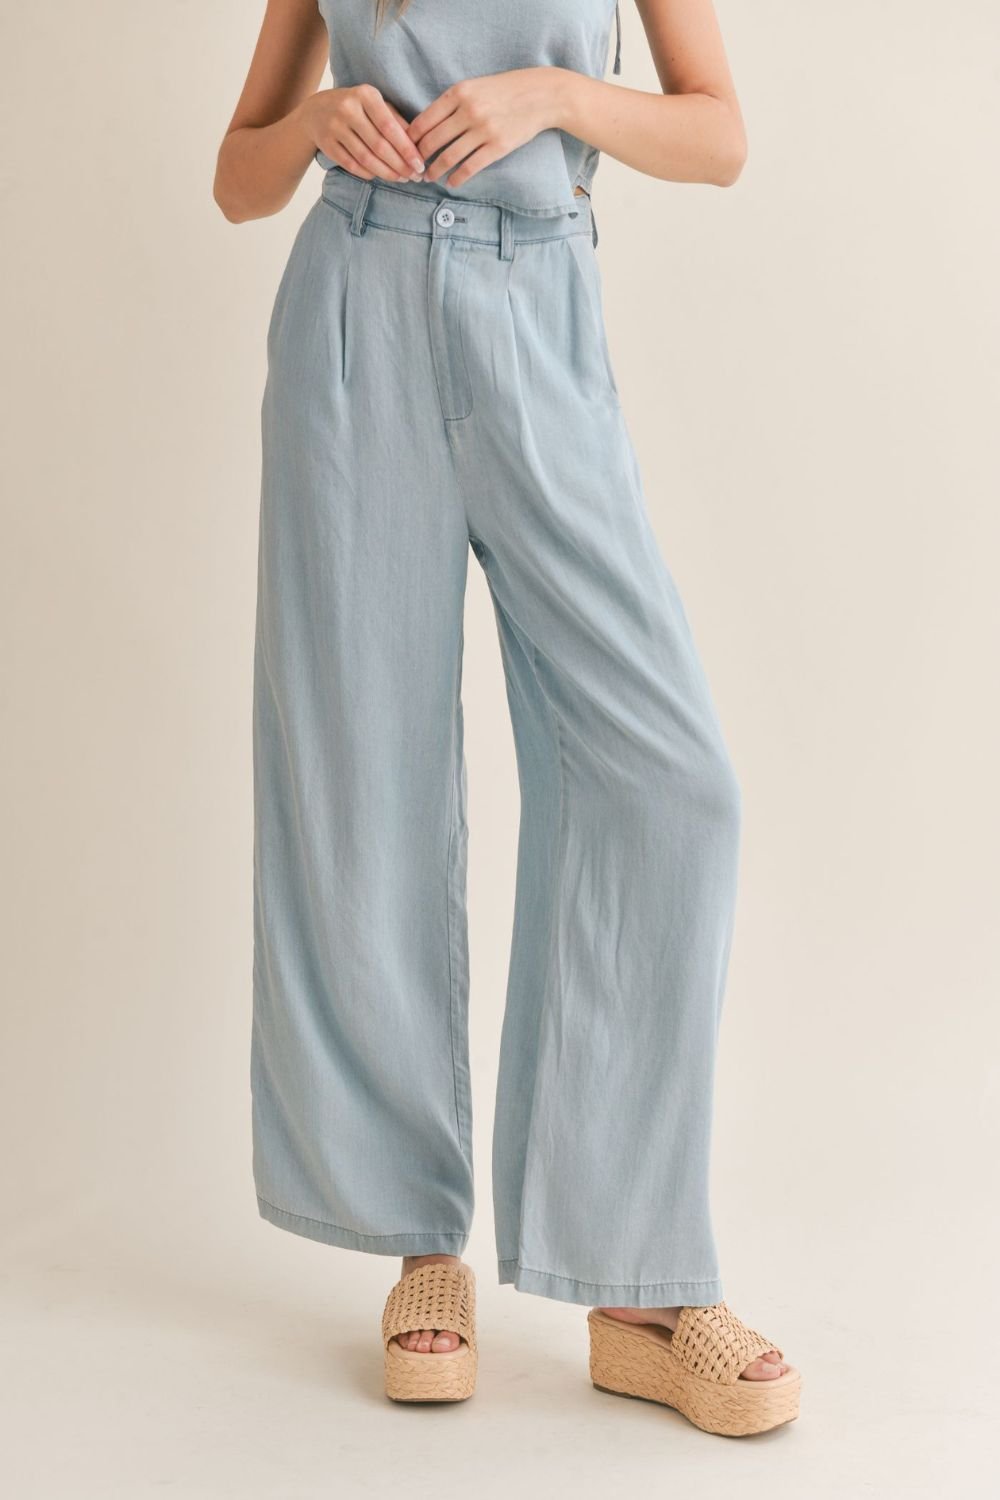 Women's Chambray Trouser Pants | Light Wash Denim - Women's Pants - Blooming Daily